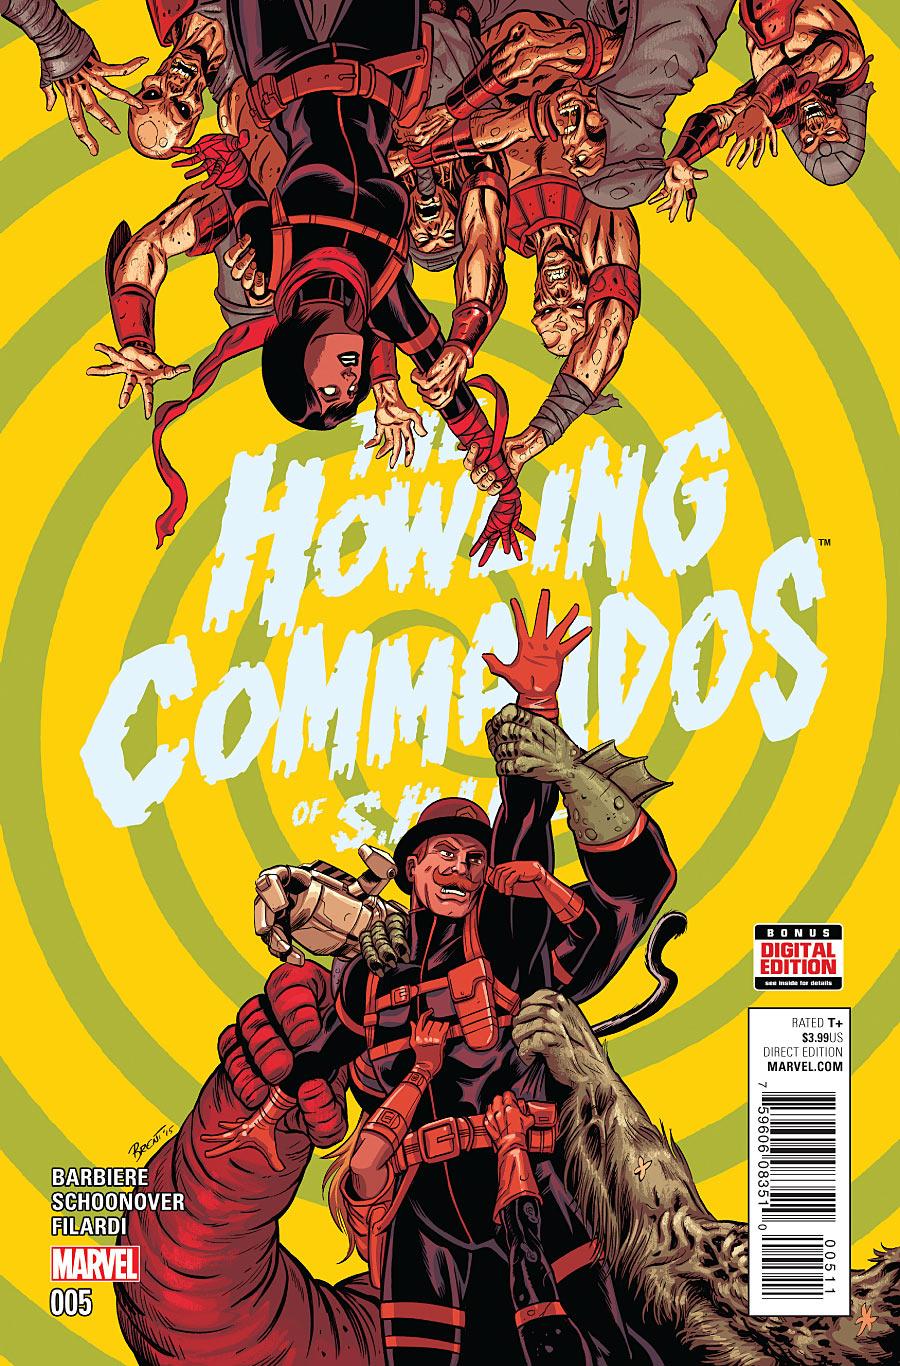 Howling Commandos of S.H.I.E.L.D. Vol. 1 #5